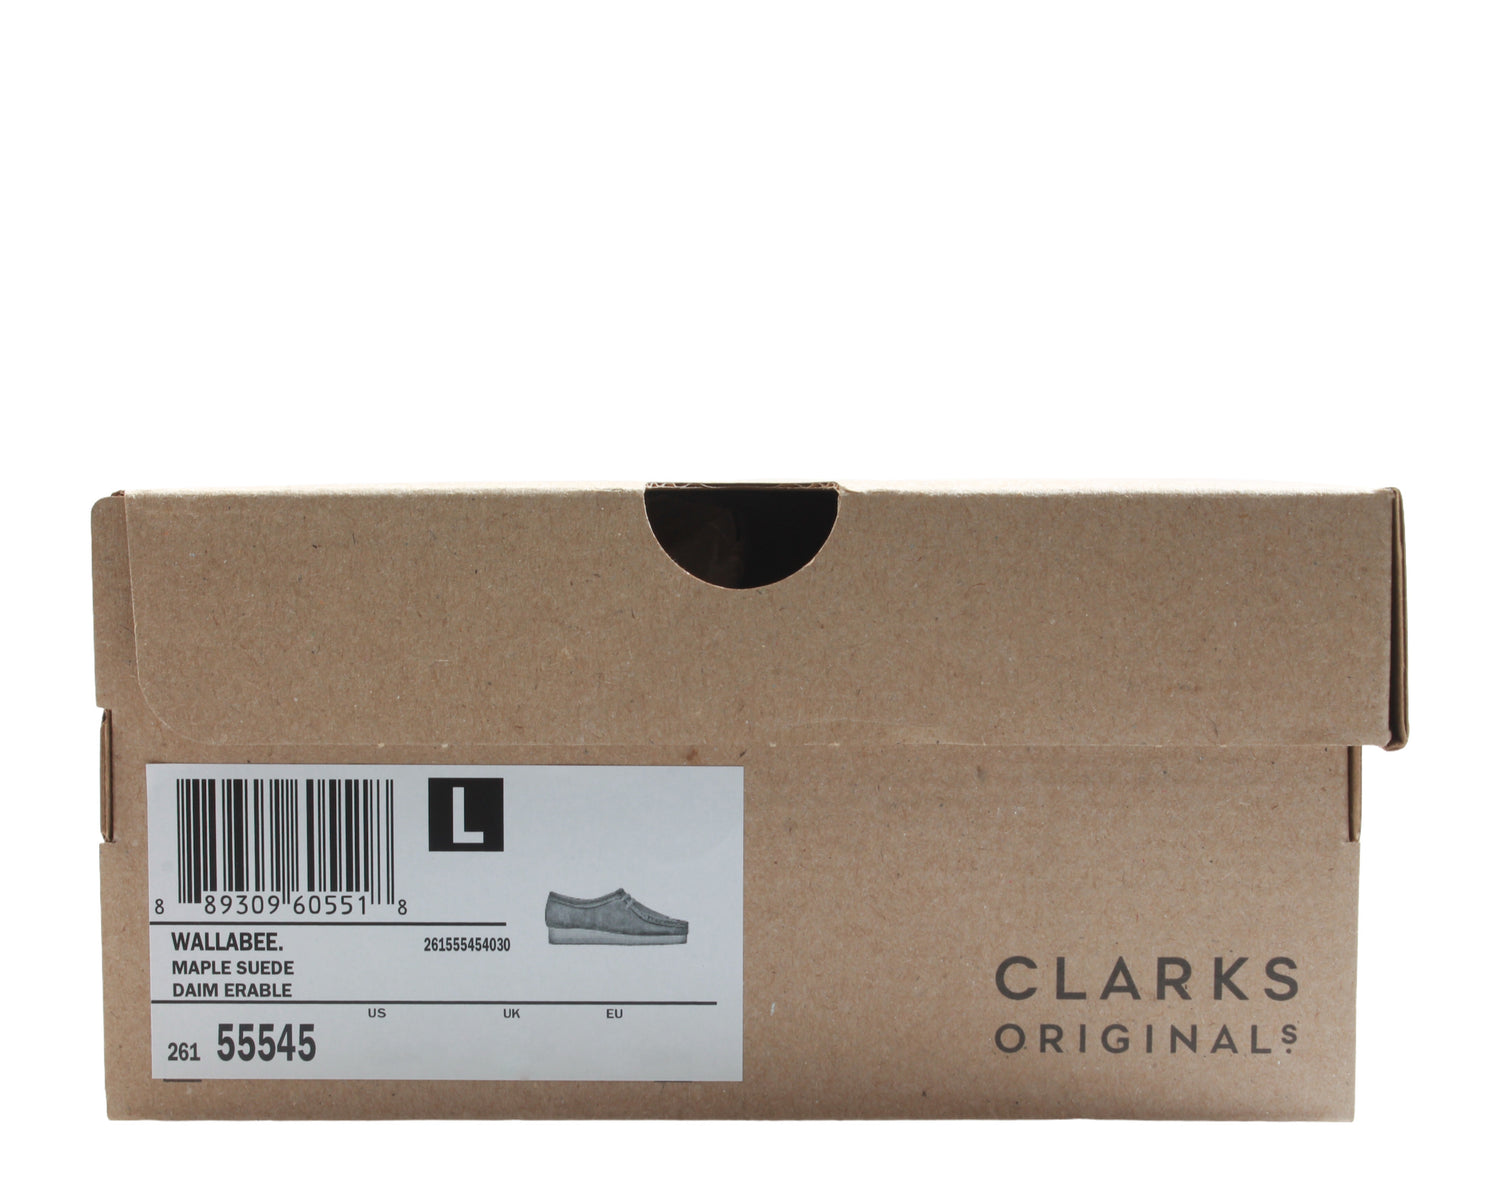 Clarks Originals Wallabee Women's Casual Shoes